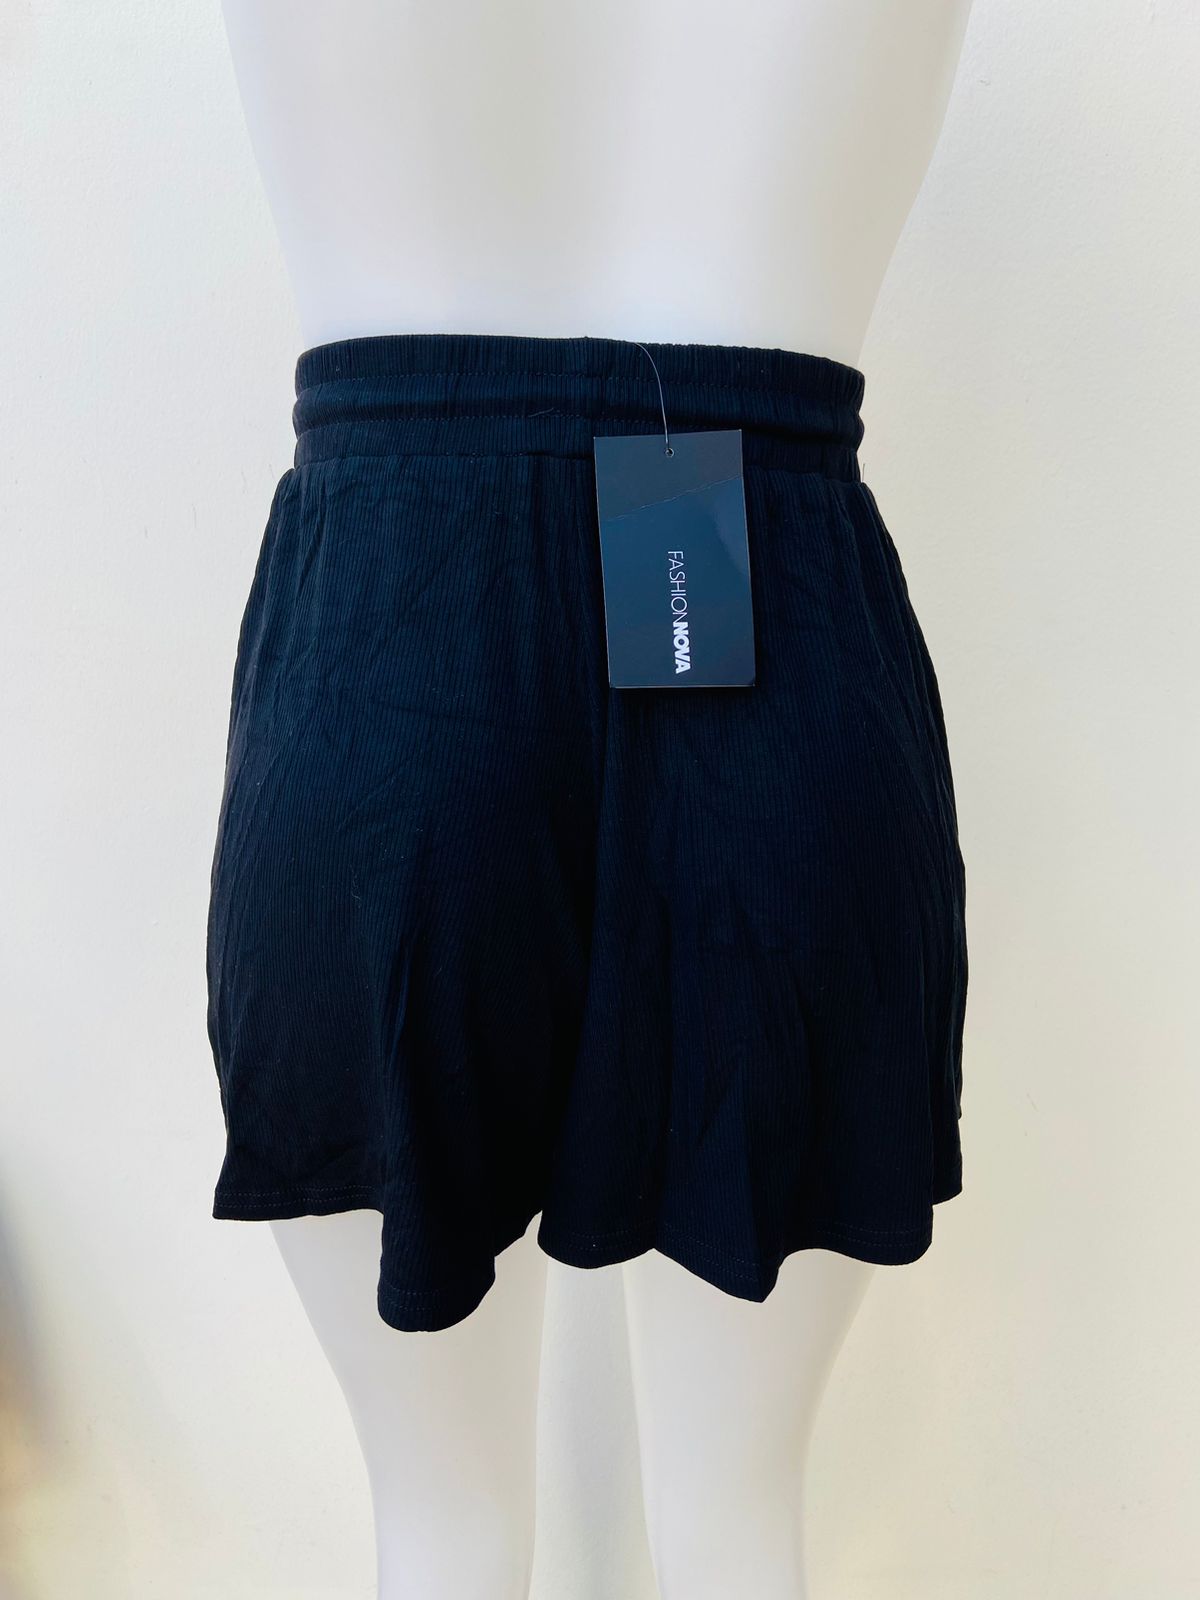 Short Fashion Nova original, de tela sin bolsillos. Lazo ajustable en el centro.